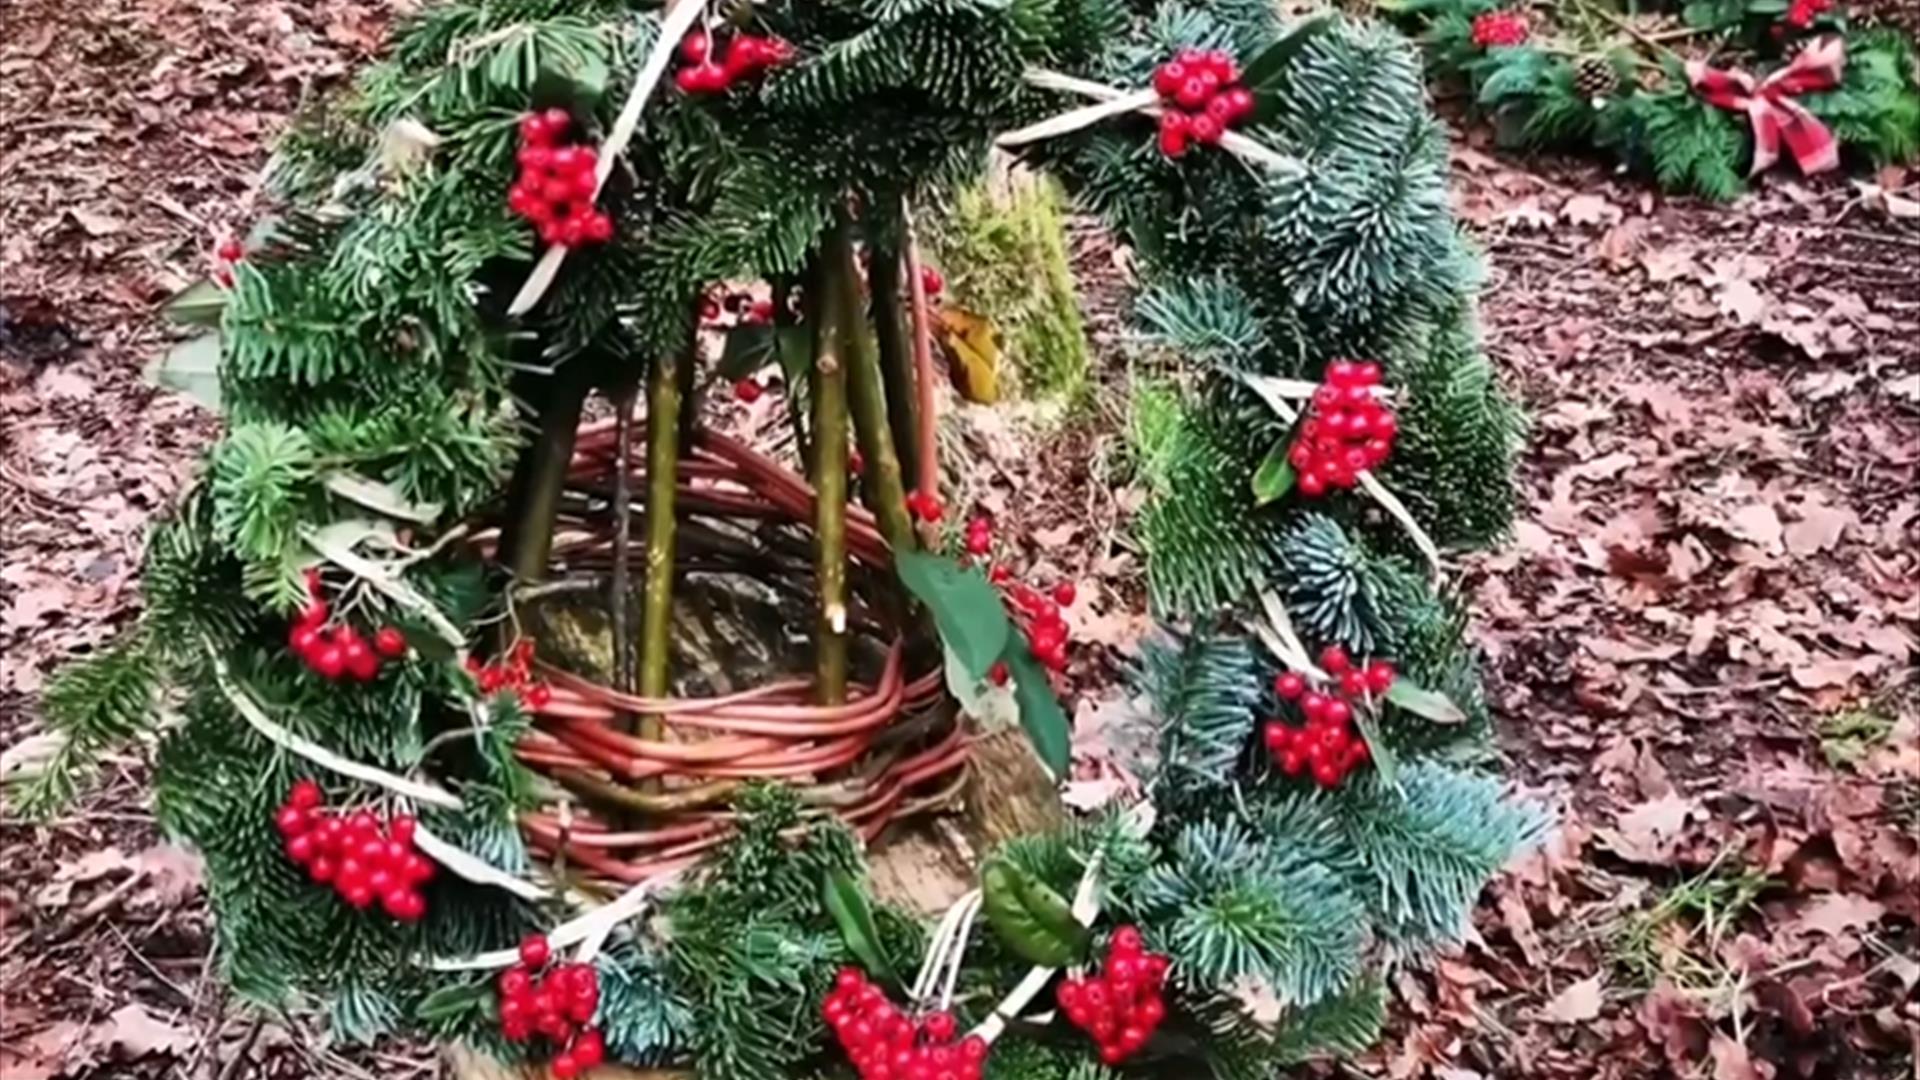 Festive Wreath